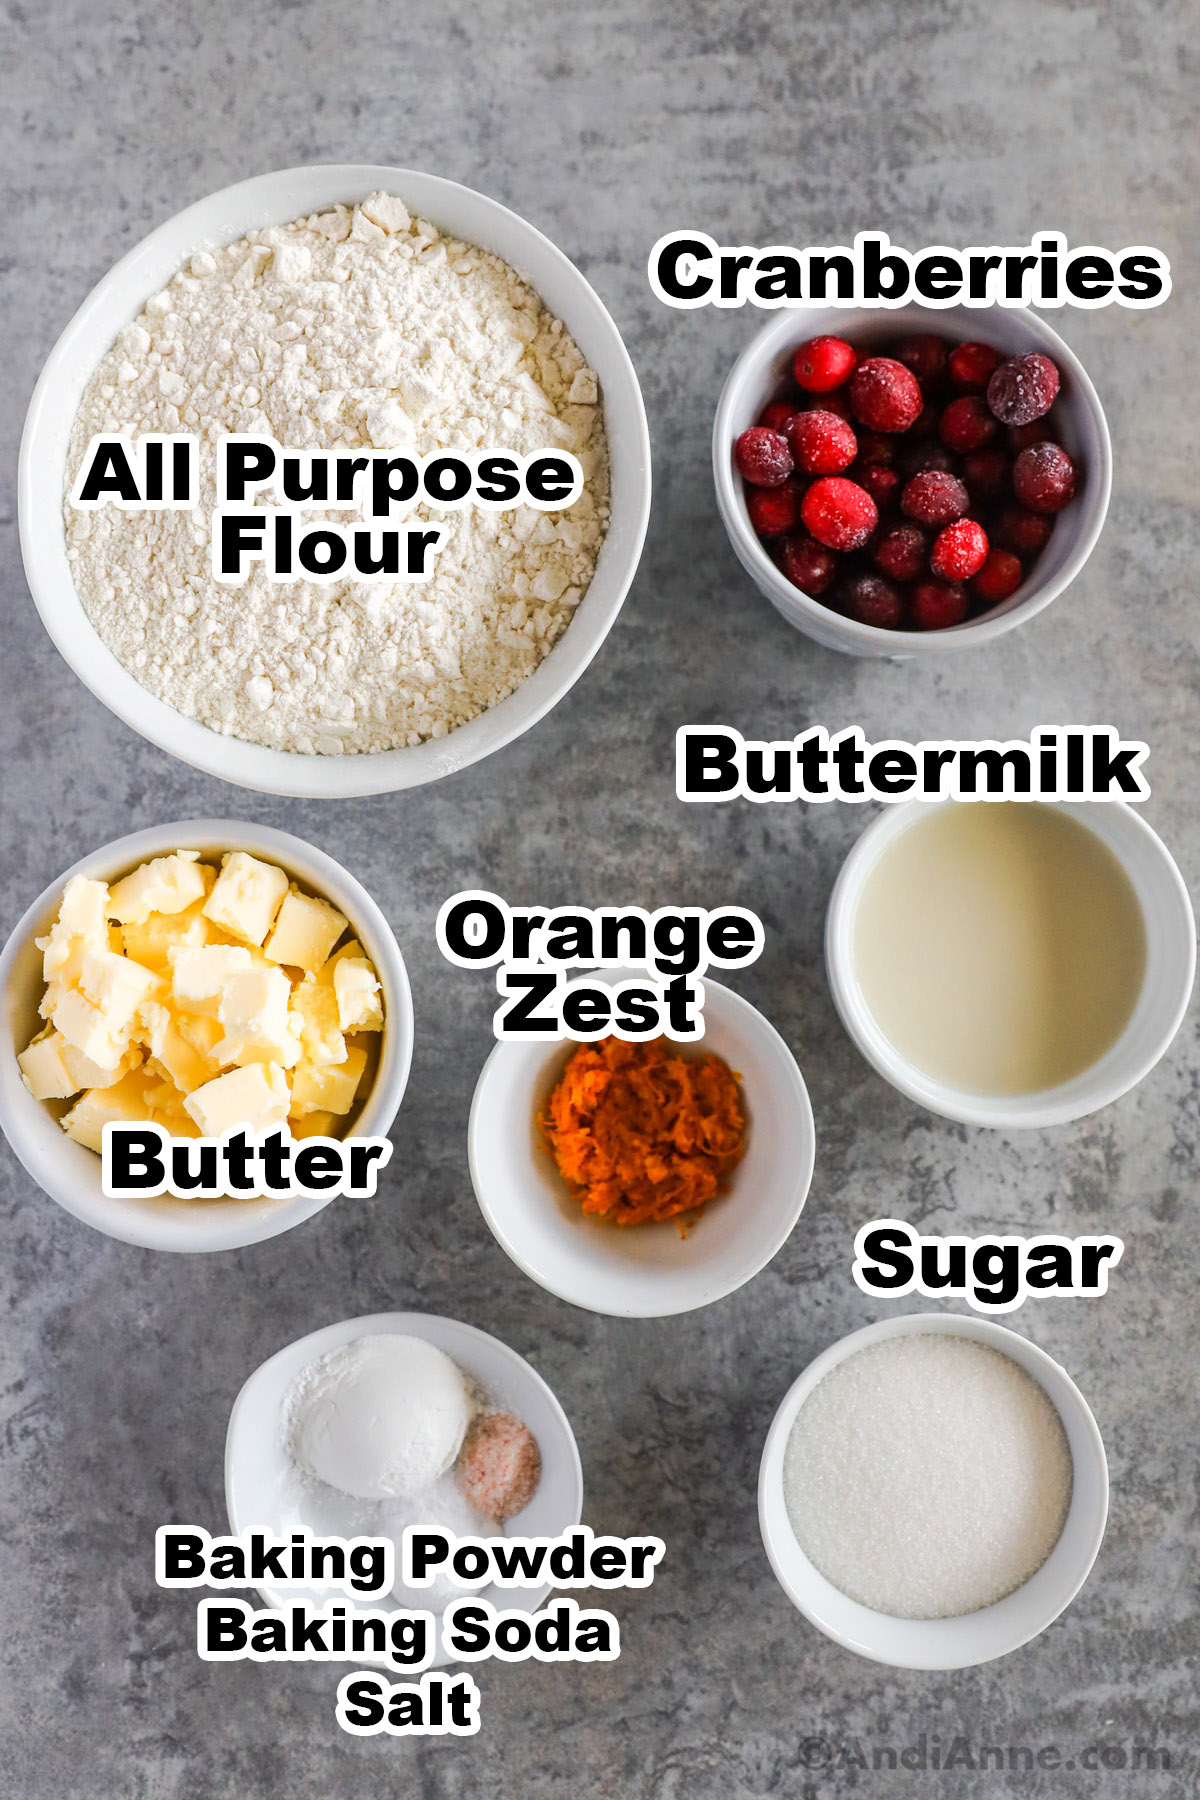 Recipe ingredients including bowls of flour, frozen cranberries, buttermilk, orange zest, cubed butter, sugar and baking powder.